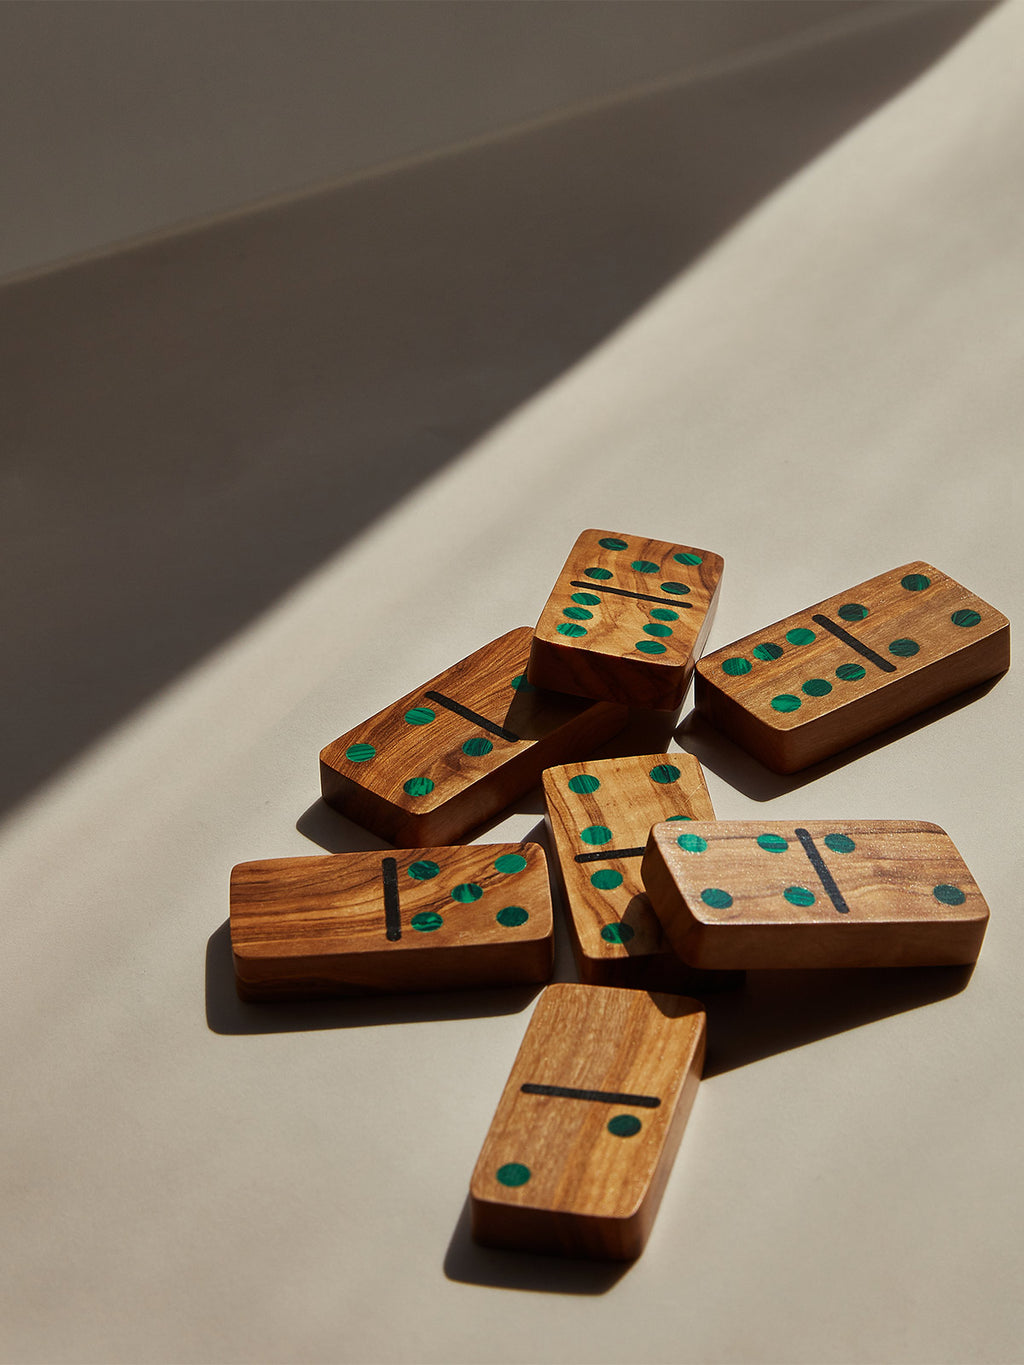 Small Olive Wood Domino Set